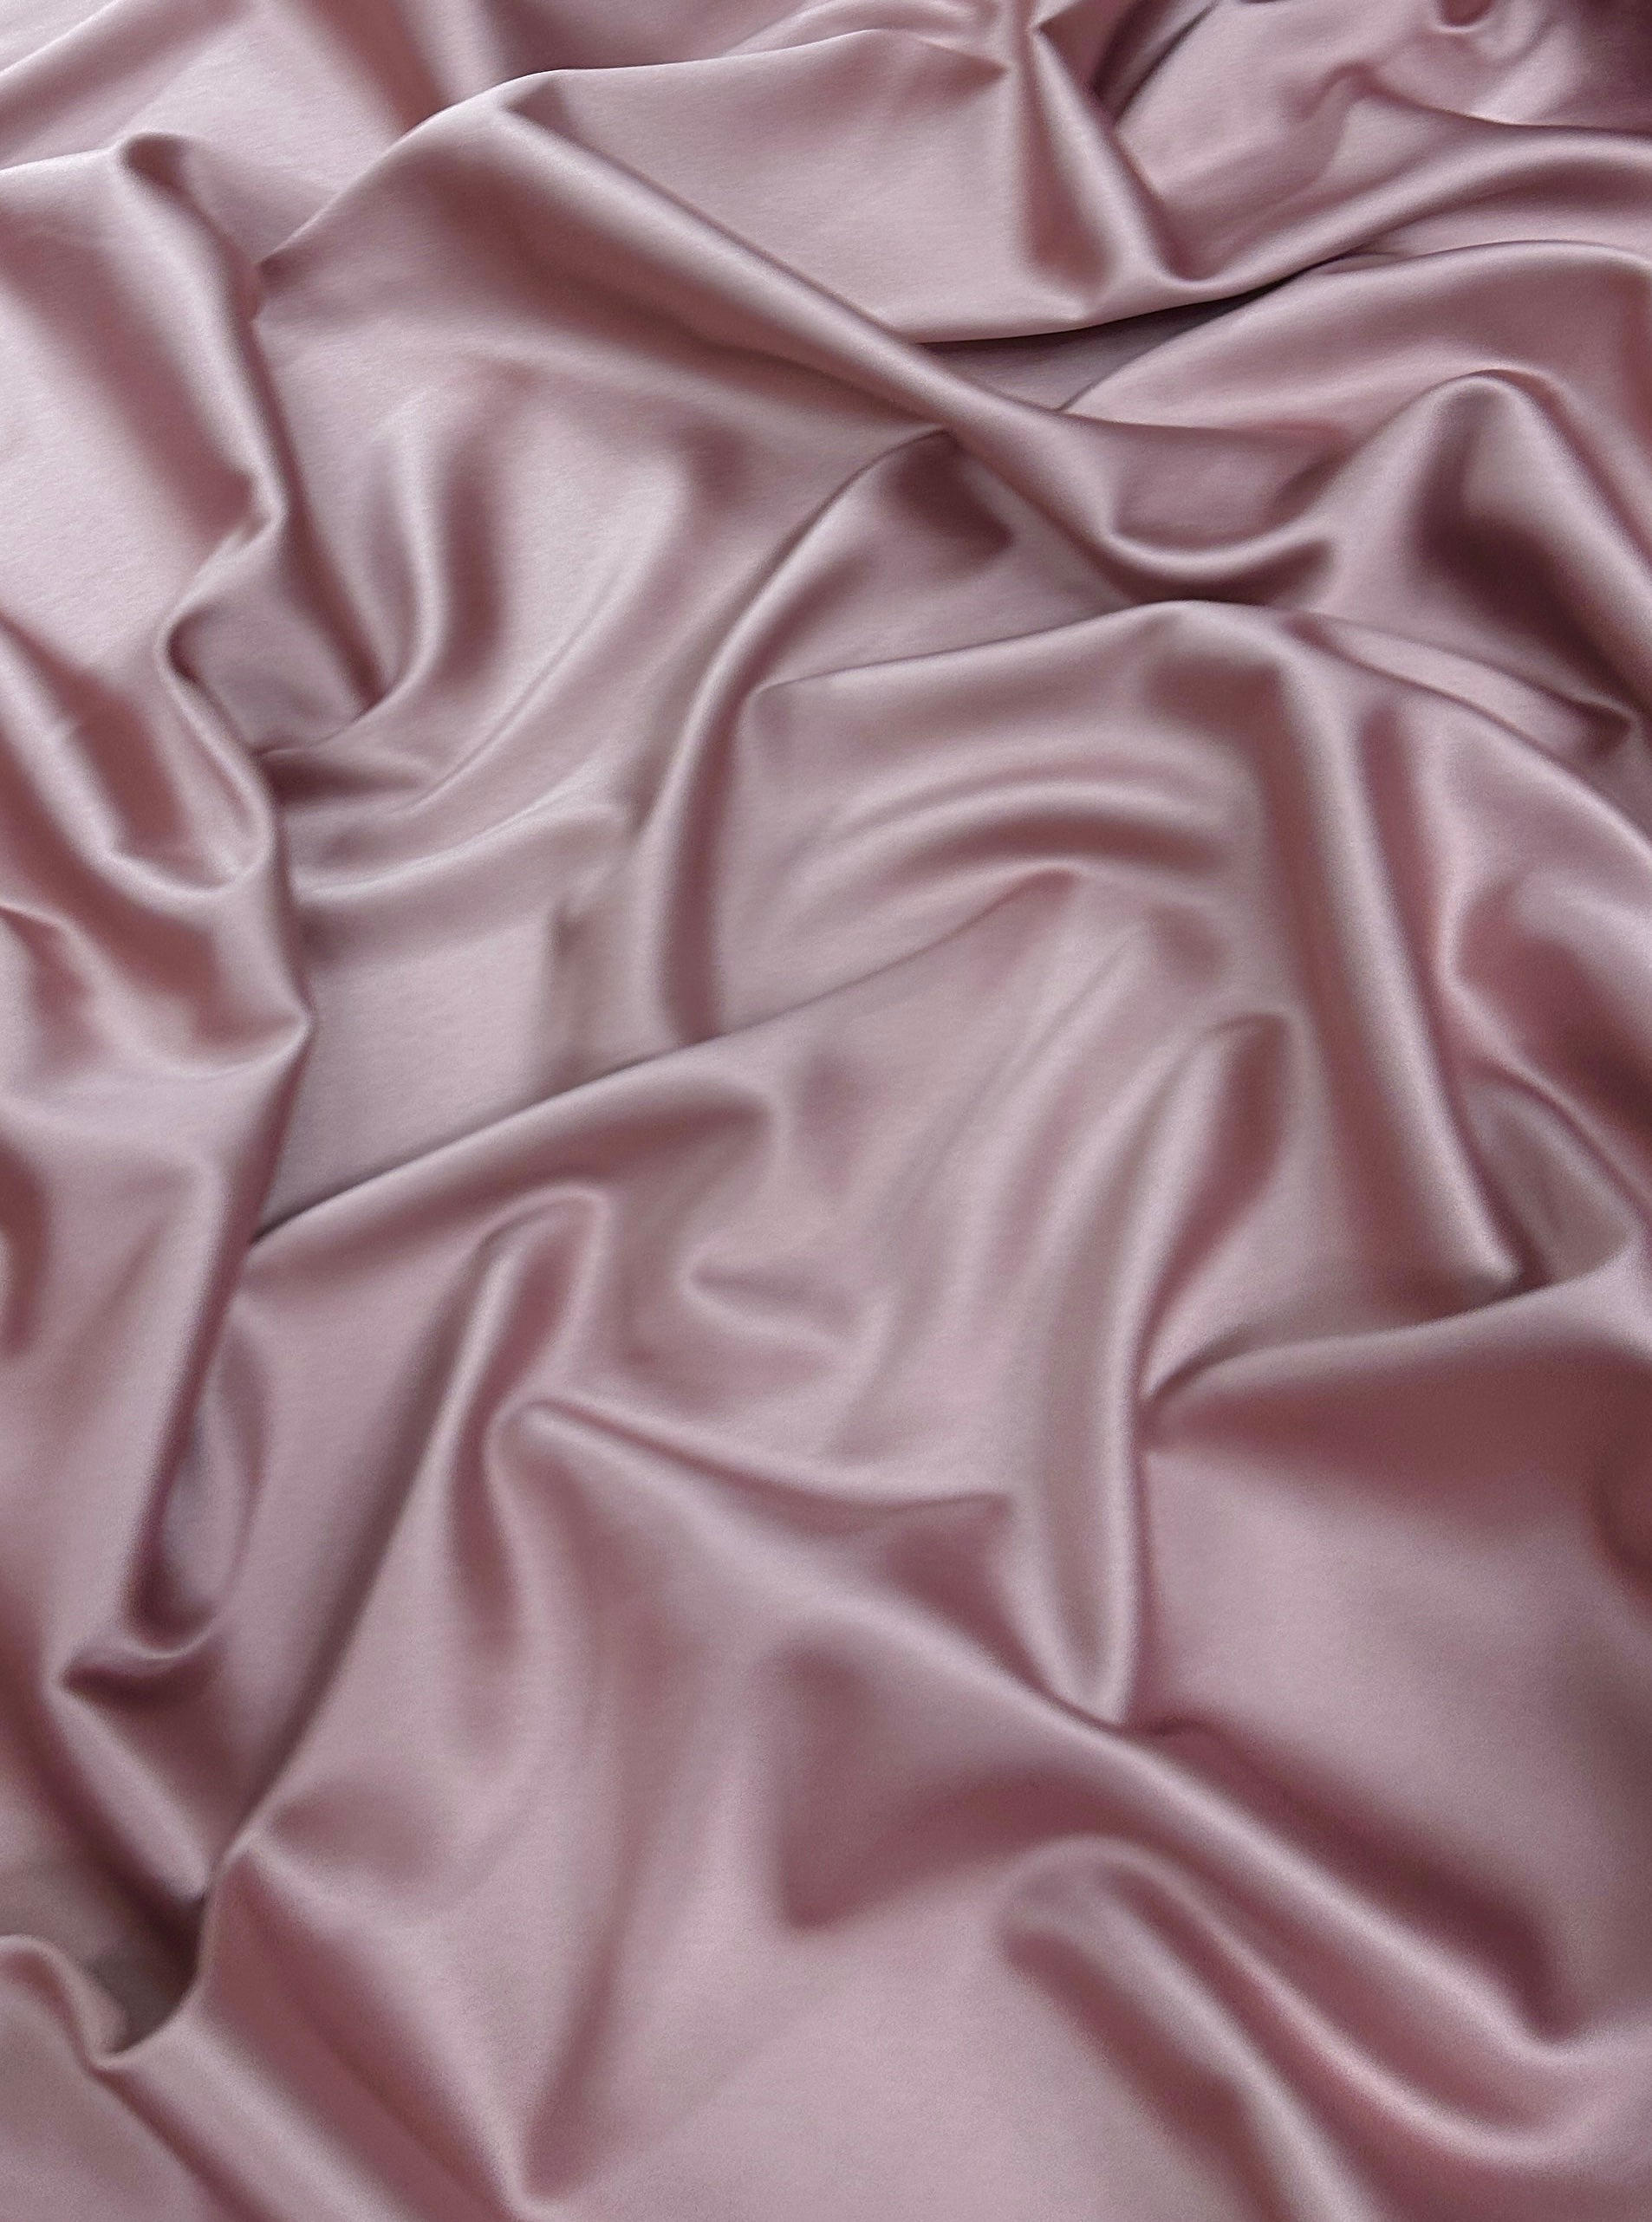 shiny silk fabric, solid silk, solid satin, mulberry silk, stretch silk charmeuse, silk fabric by the yard, natural silk, pure silk, 100% pure silk, natural fabric, kiki textiles, online fabric store usa, luxurious fabric, silk satin online, fancy silk, soft silk, smooth silk, 100% natural silk, charmeuse satin, liliac natural silk, liliac silk, mauve natural silk, mauve silk, liliac natural stretch silk, mauve silk, mauve silk, baby pink silk, liliac silk satin, mauve silk satin, purple silk